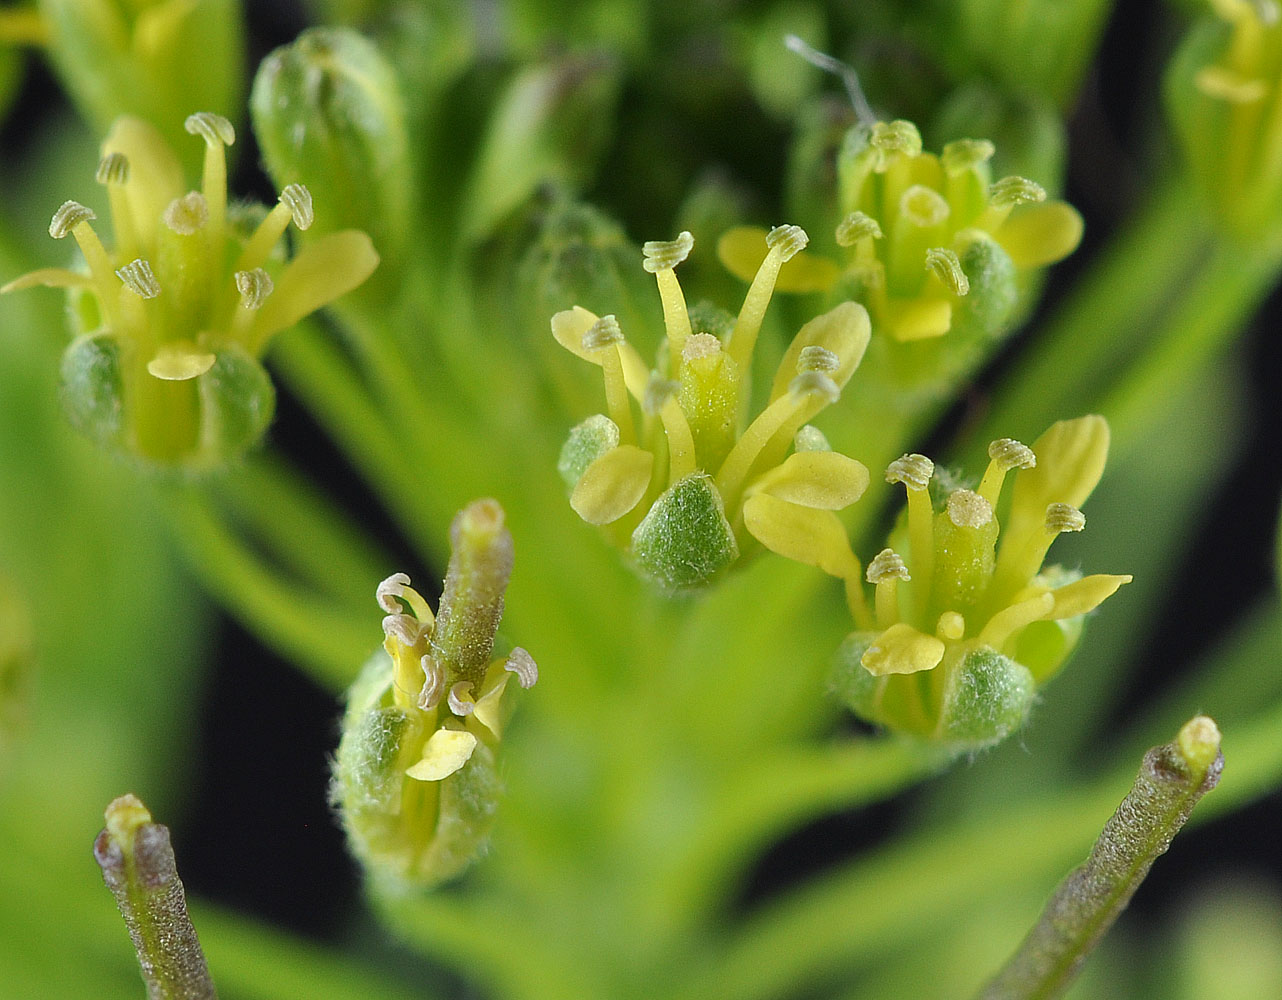 Flora of Eastern Washington Image: Descurainia sophia